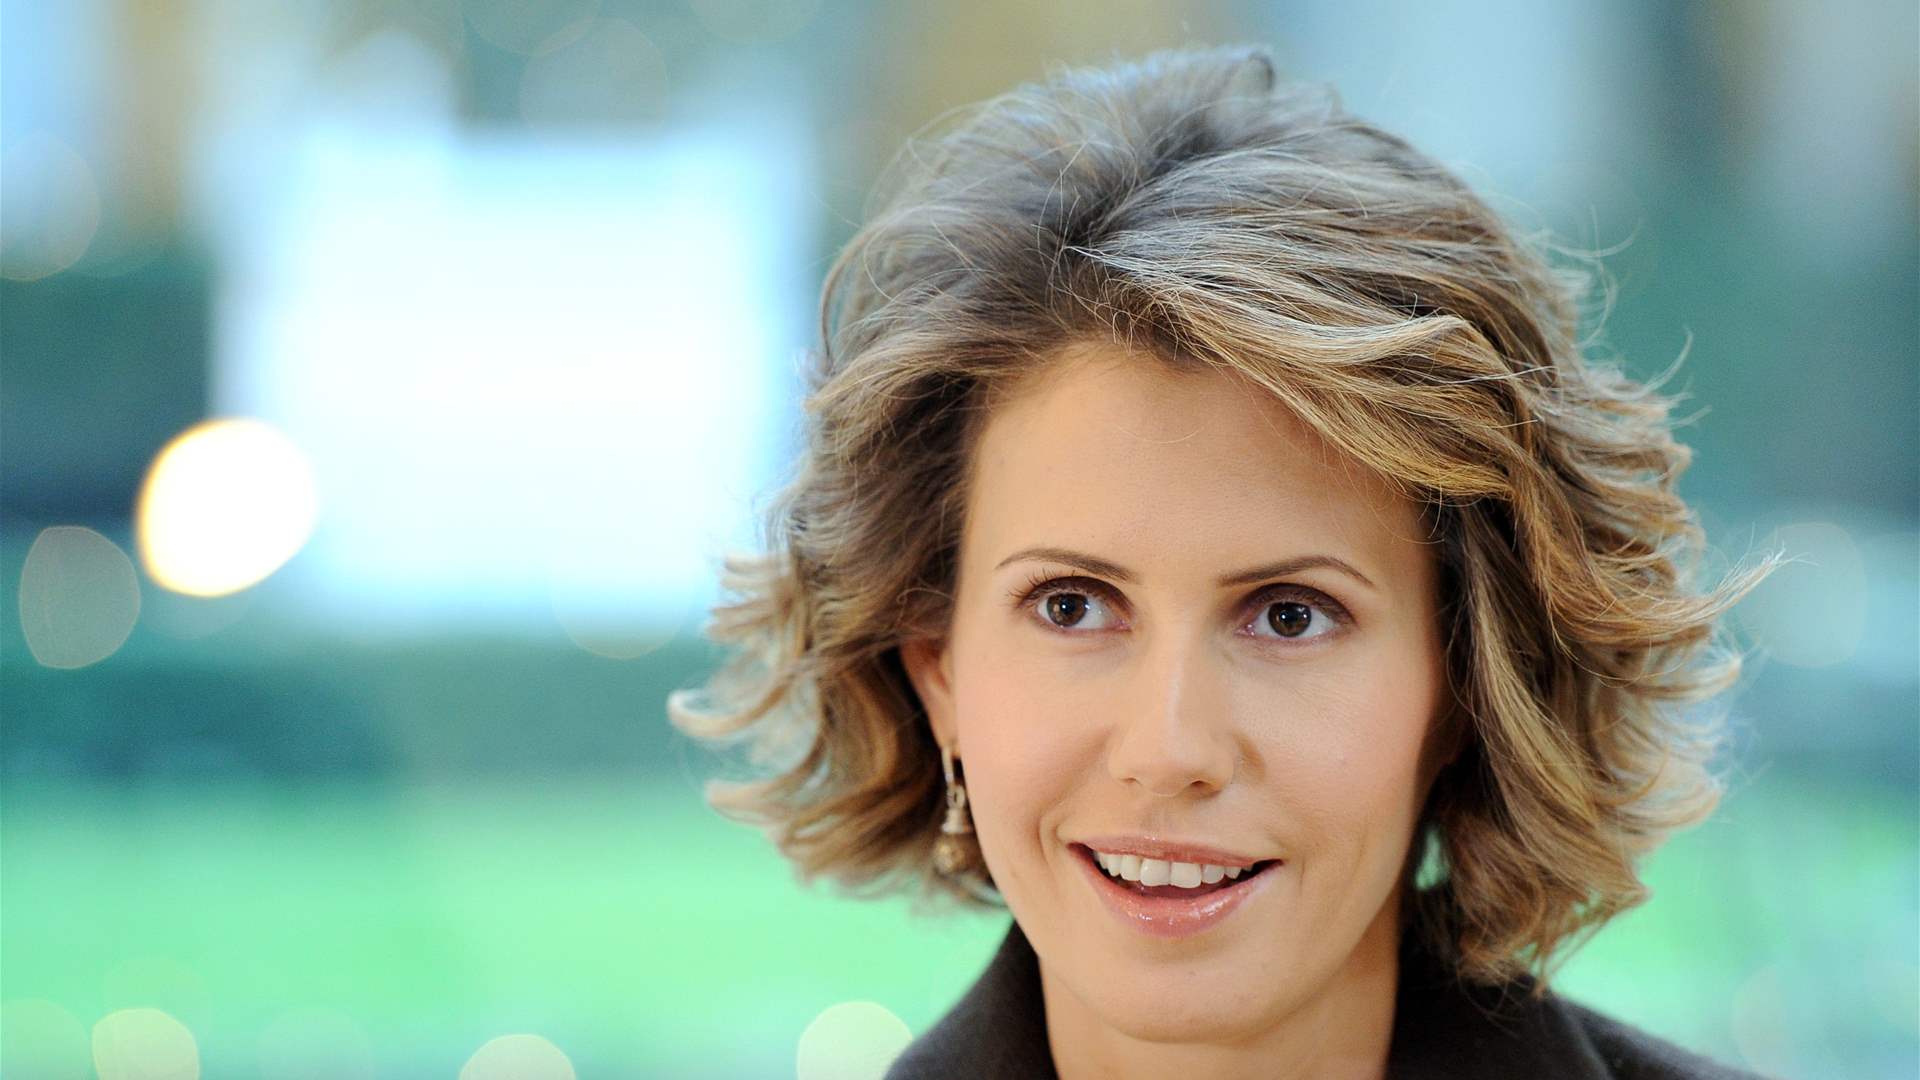 Syria&#39;s first lady Asma al-Assad has leukemia, presidency says